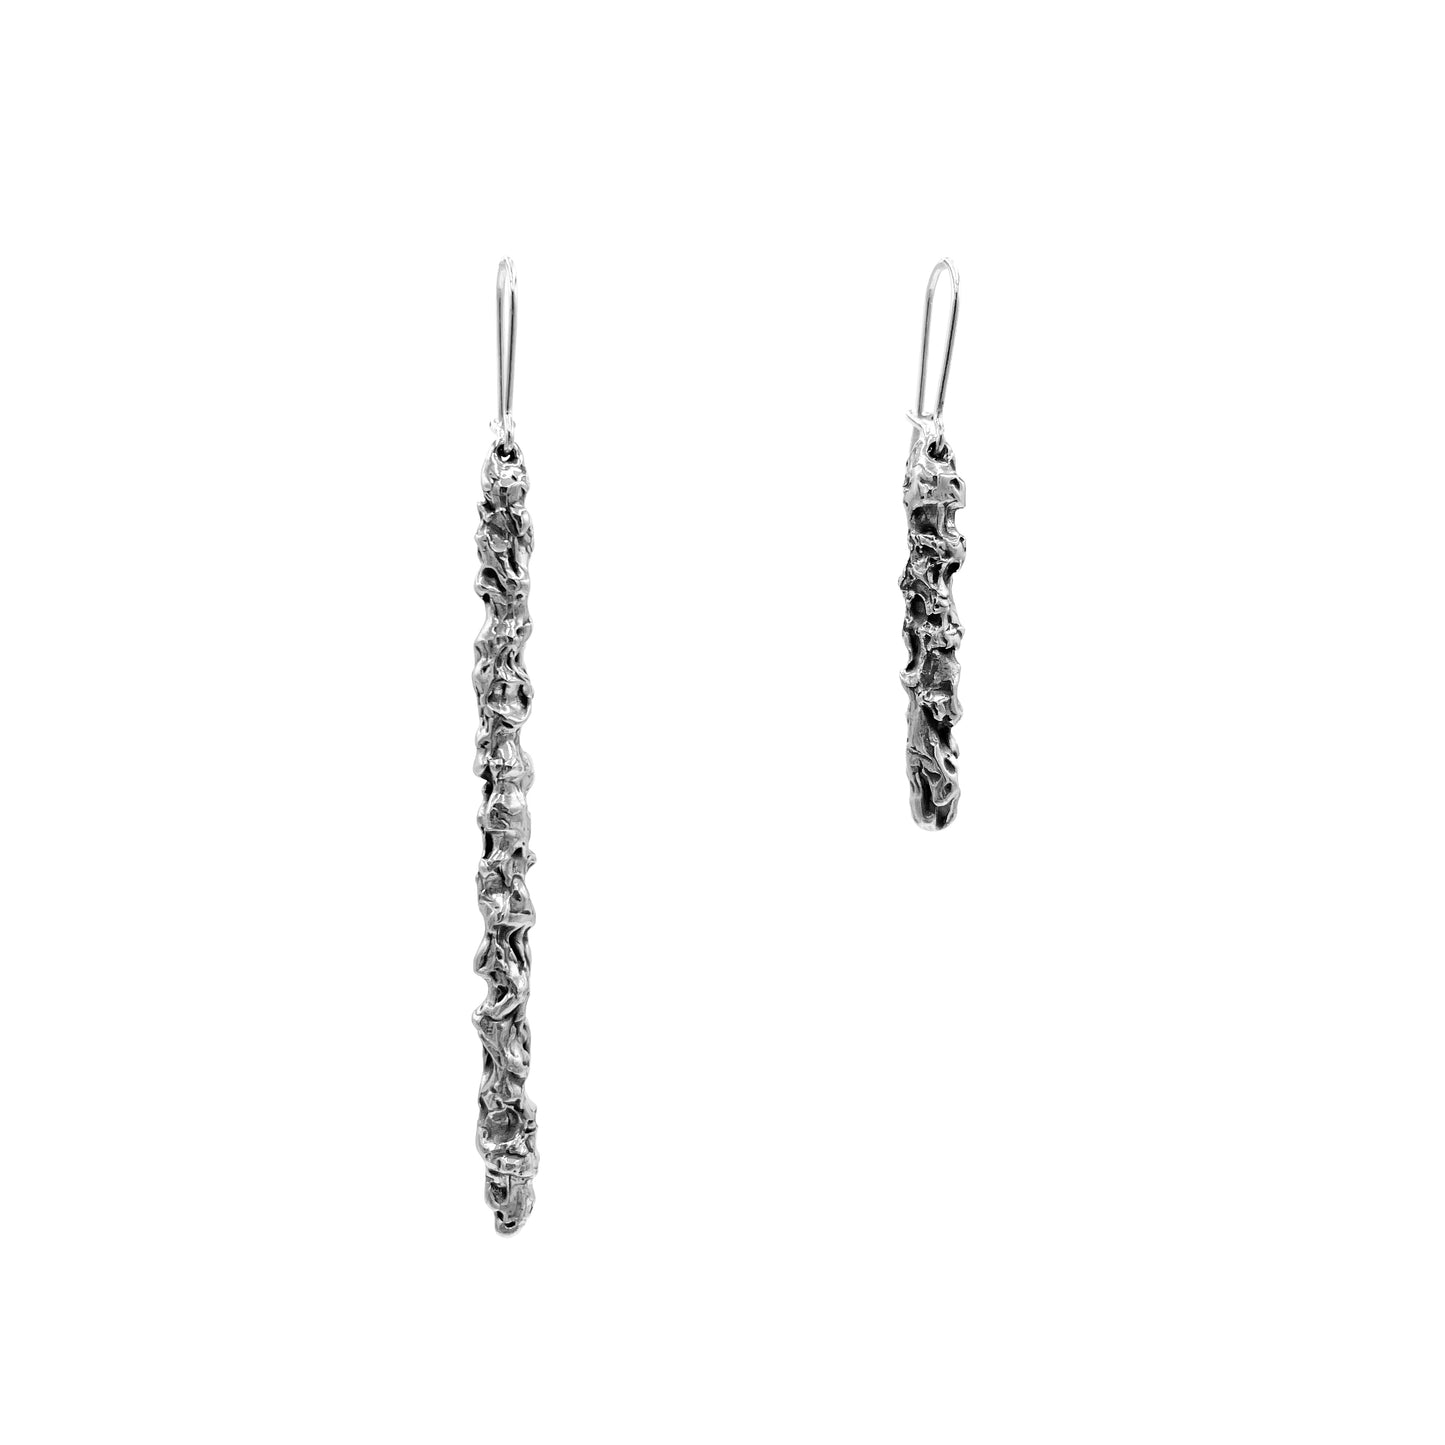 Sterling Silver Earrings Life - Life Earrings - Asymmetric Earrings - Solid Silver Earrings - Creative Earrings - Expressive Earrings